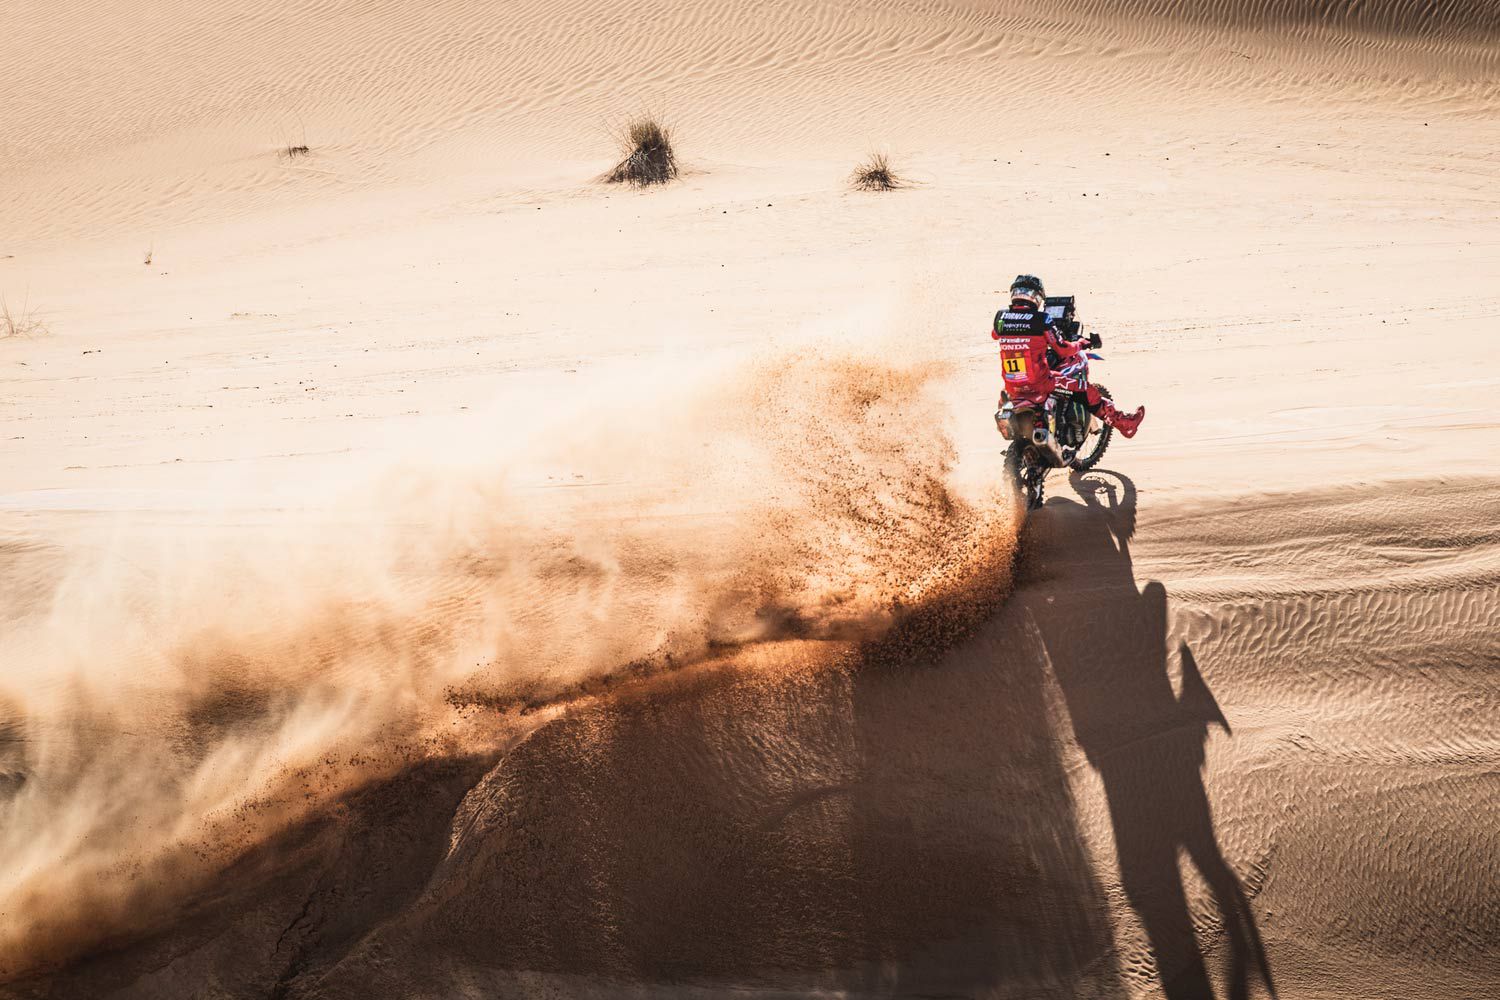 Jose Ignacio Cornejo Florimo, Monster Energy Honda Team, surfs the sand ridge, Stage 6 between Hail and Riyadh, Saudi Arabia.